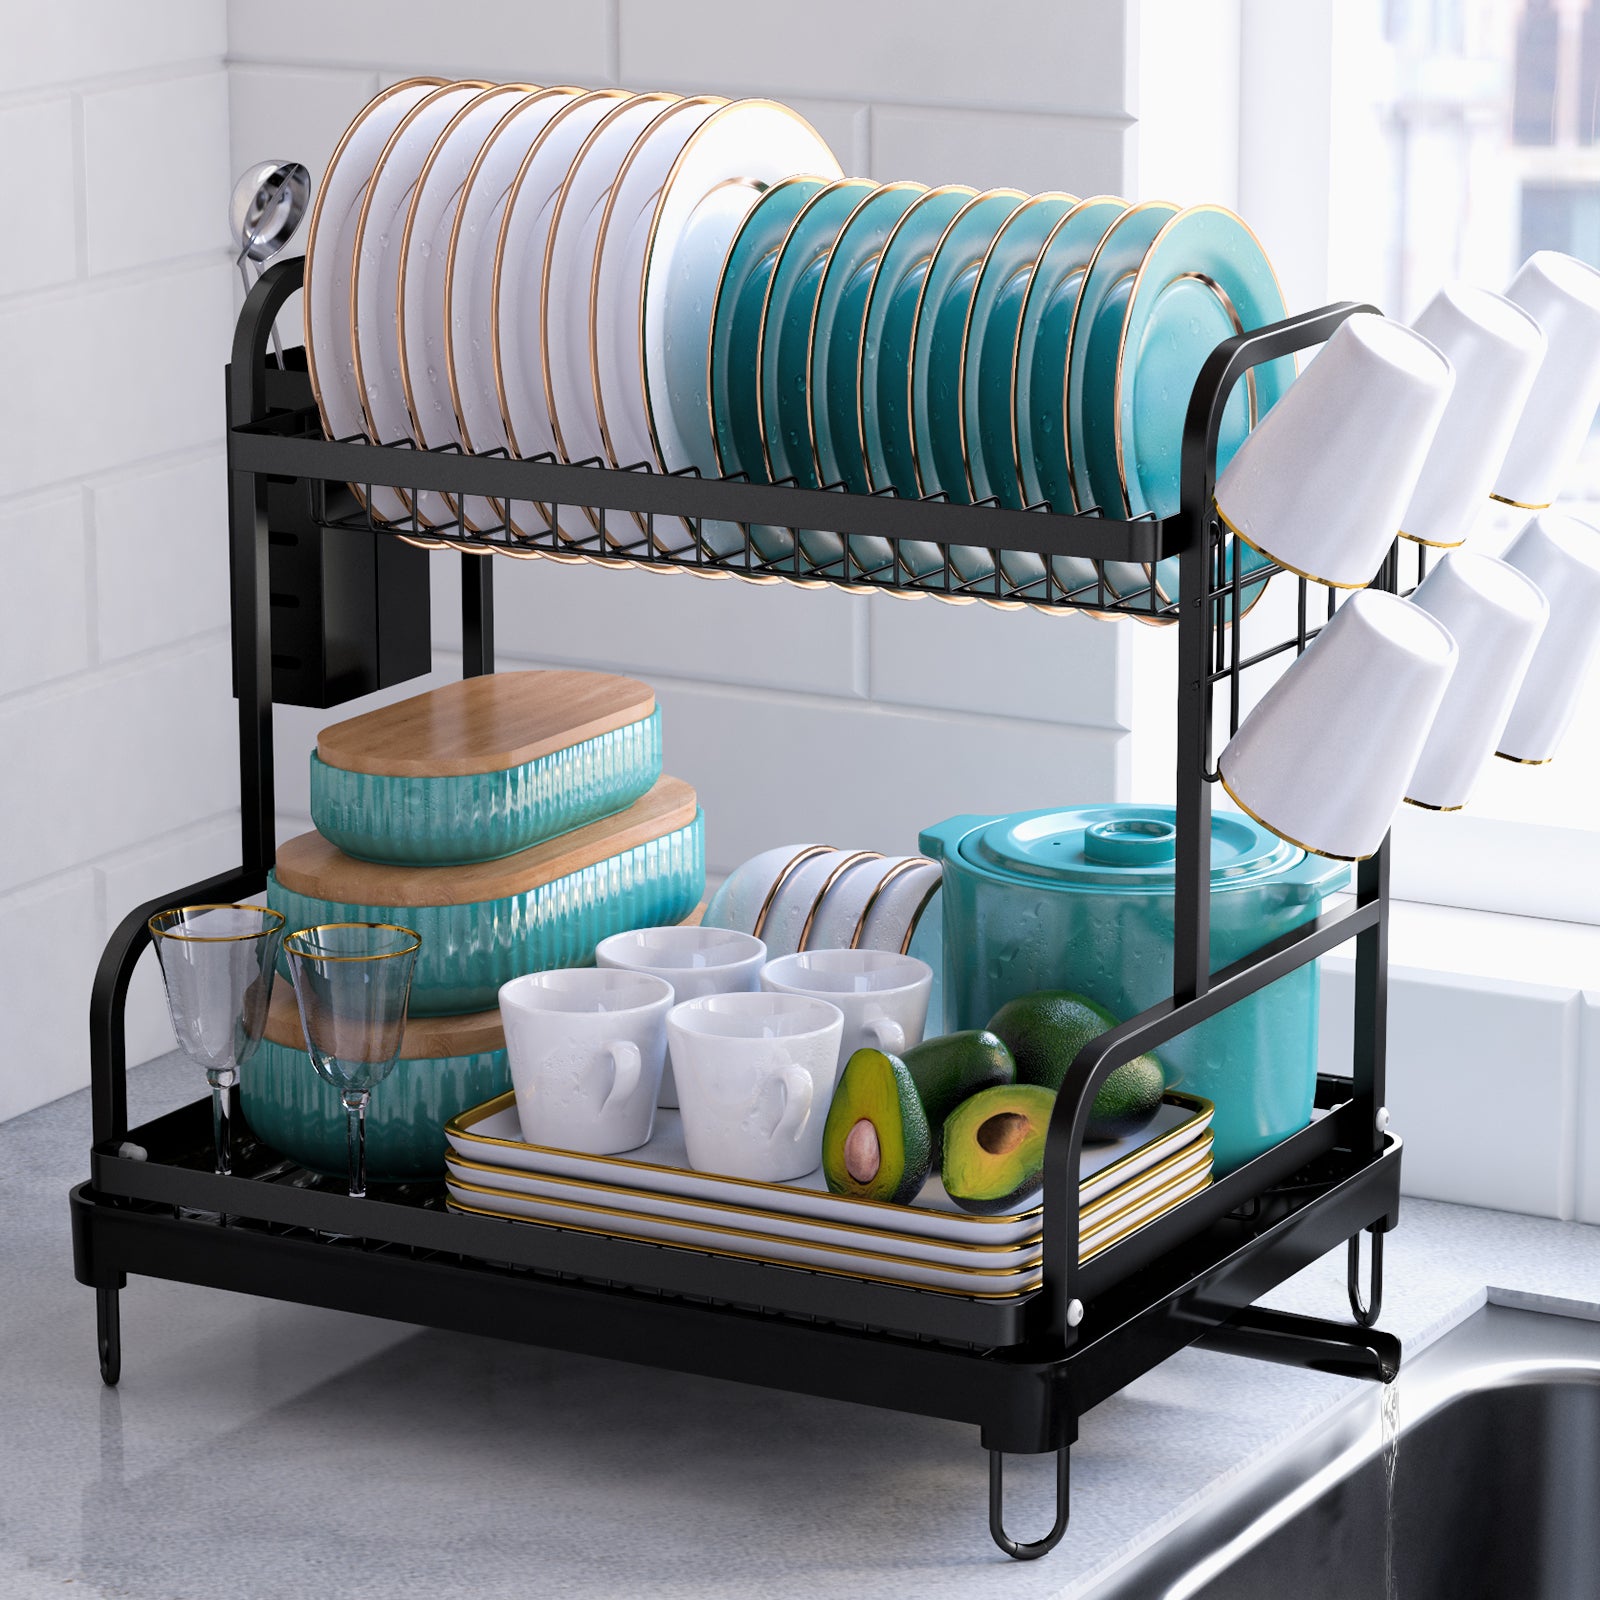 Kitsure Dish Drying Rack- Space-Saving Dish Rack, Dish Racks for